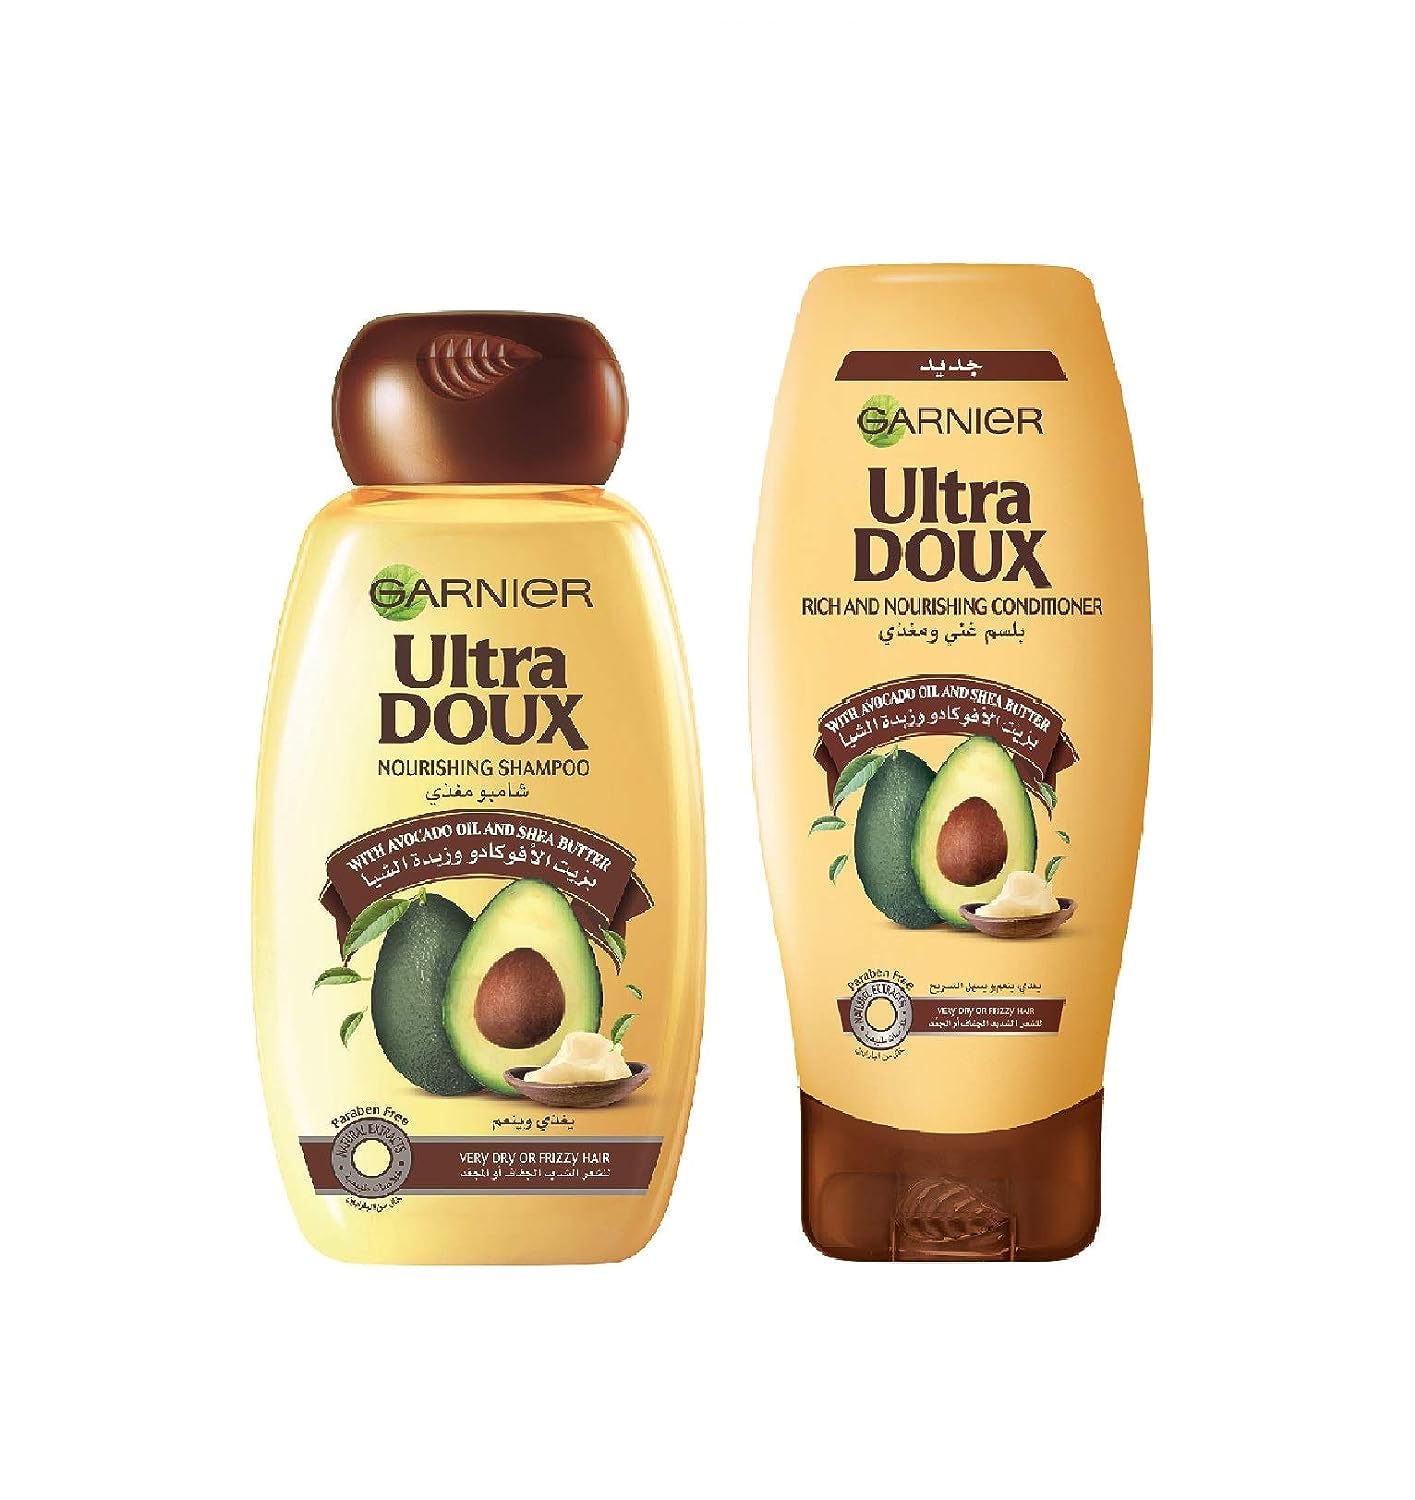 Garnier Ultra Doux Avocado Shampoo 400 ml and Conditioner 400 ml